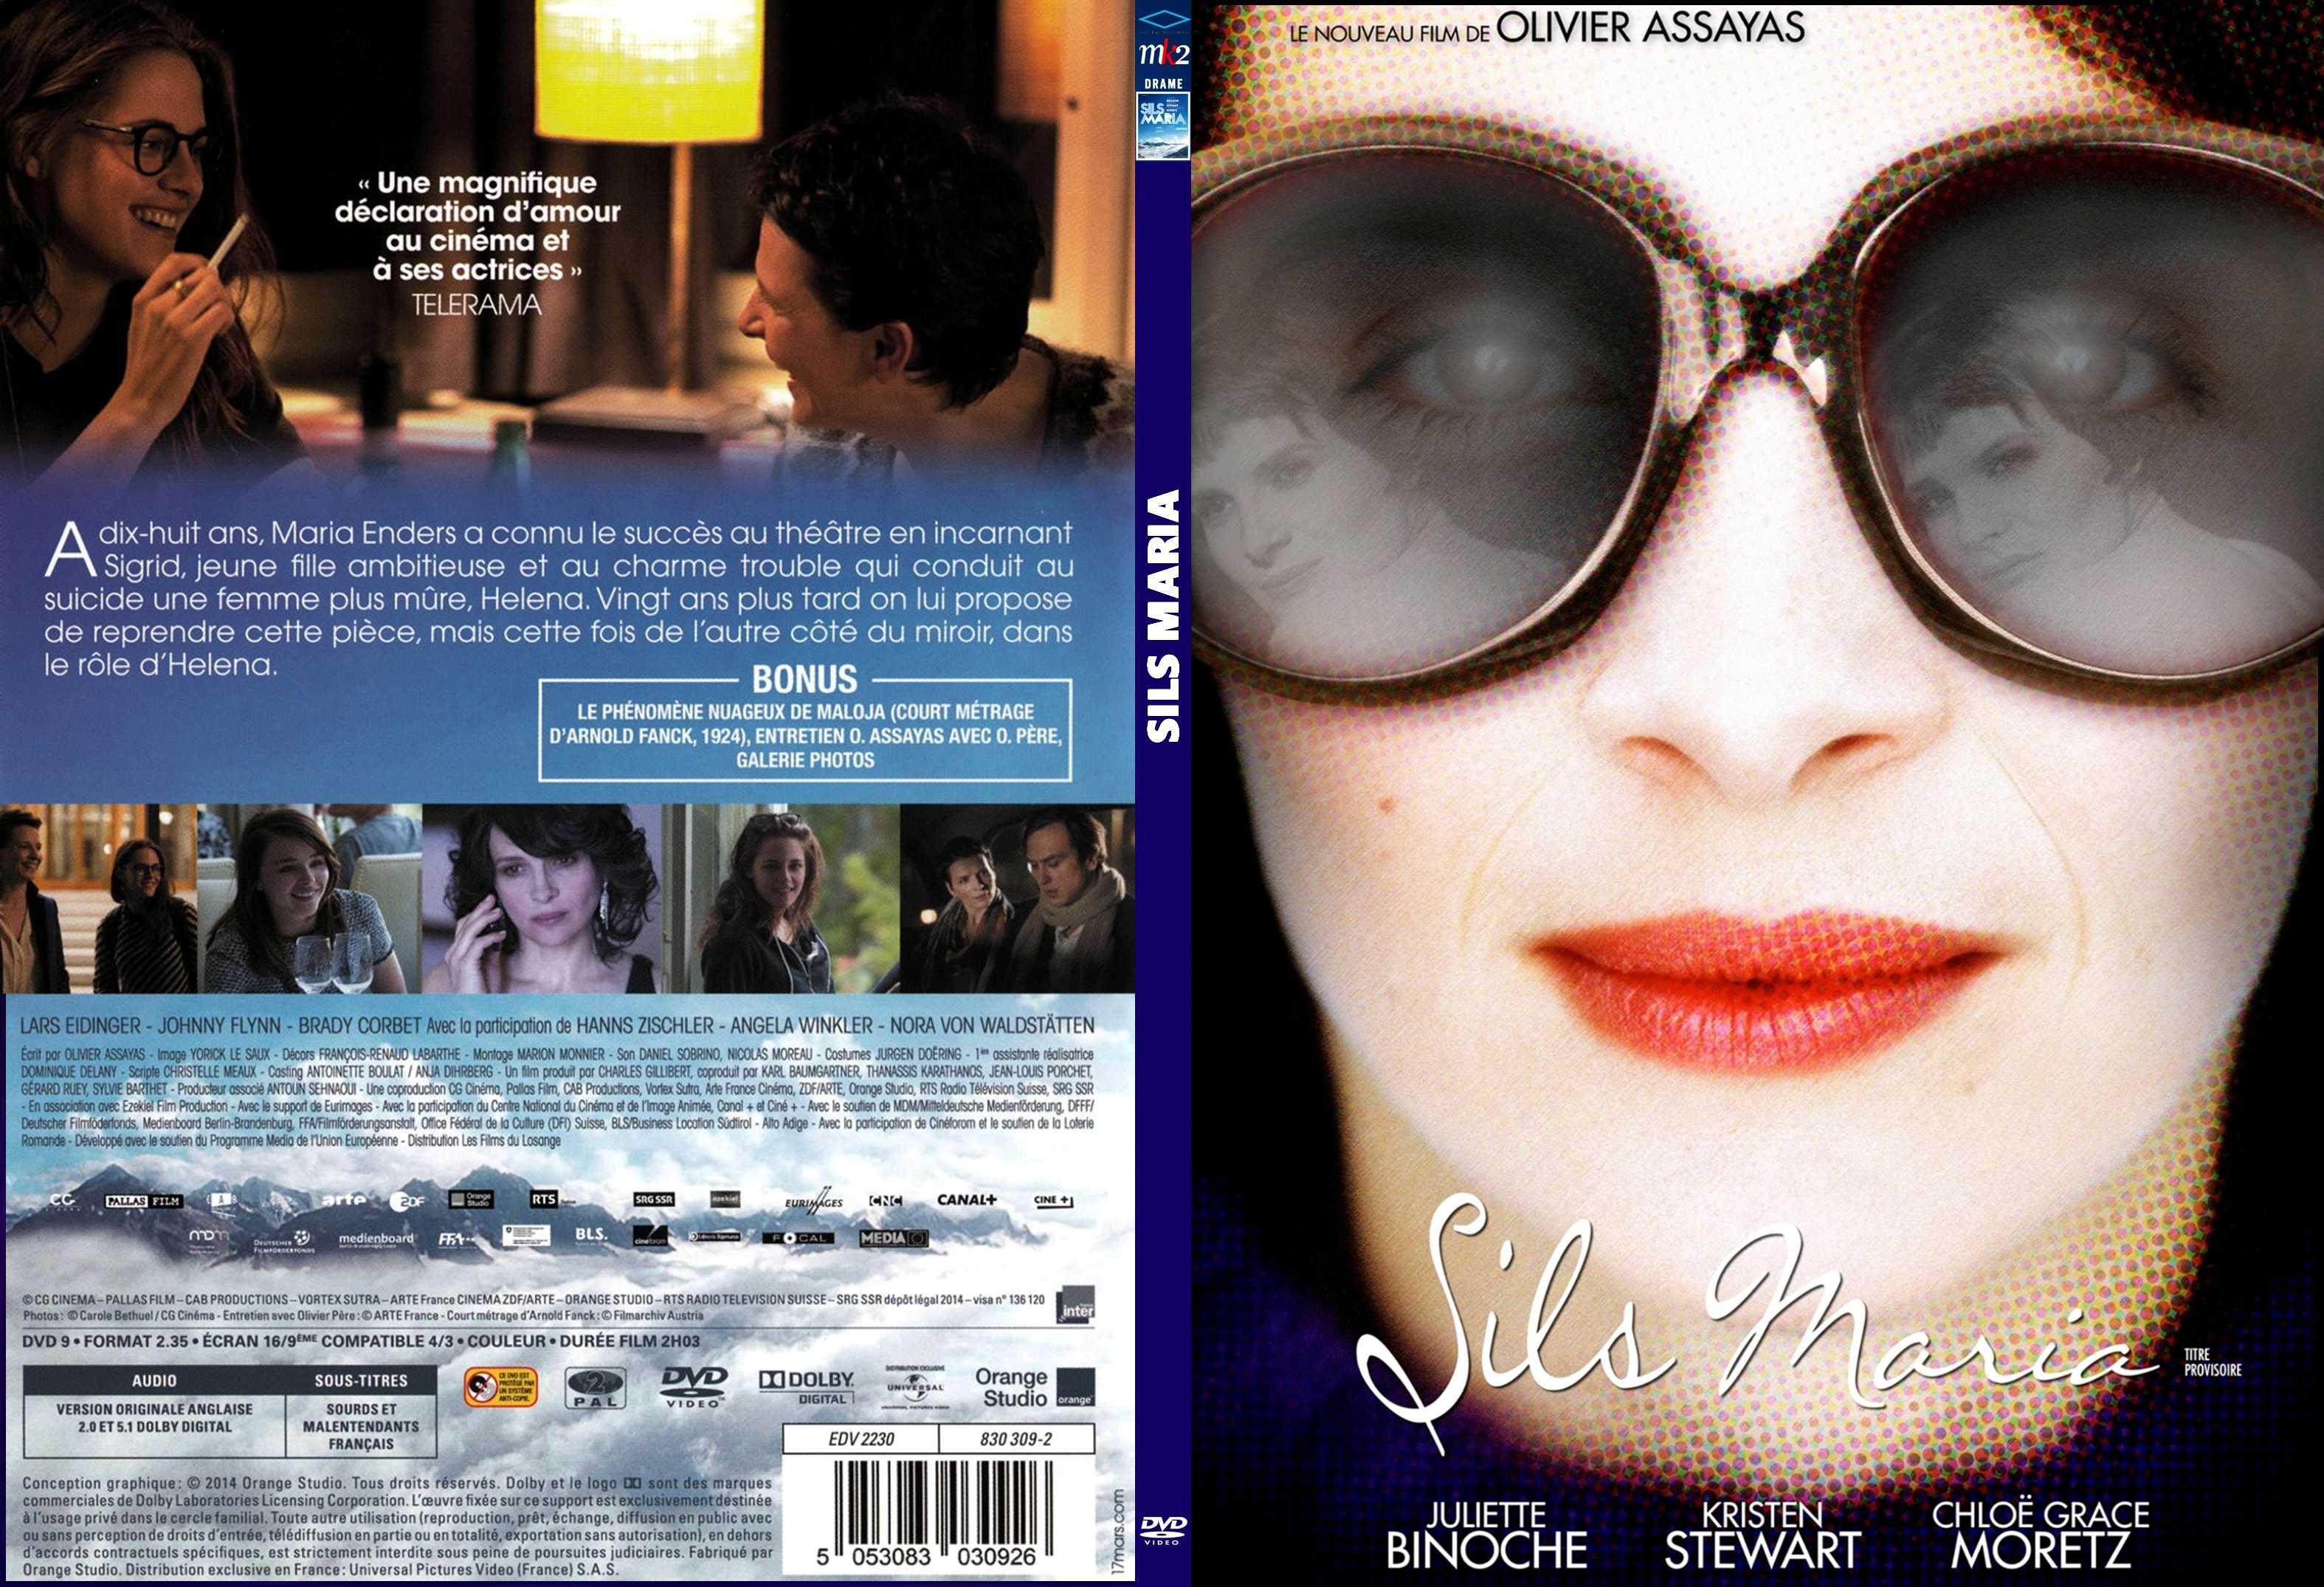 Jaquette DVD Sils Maria - SLIM